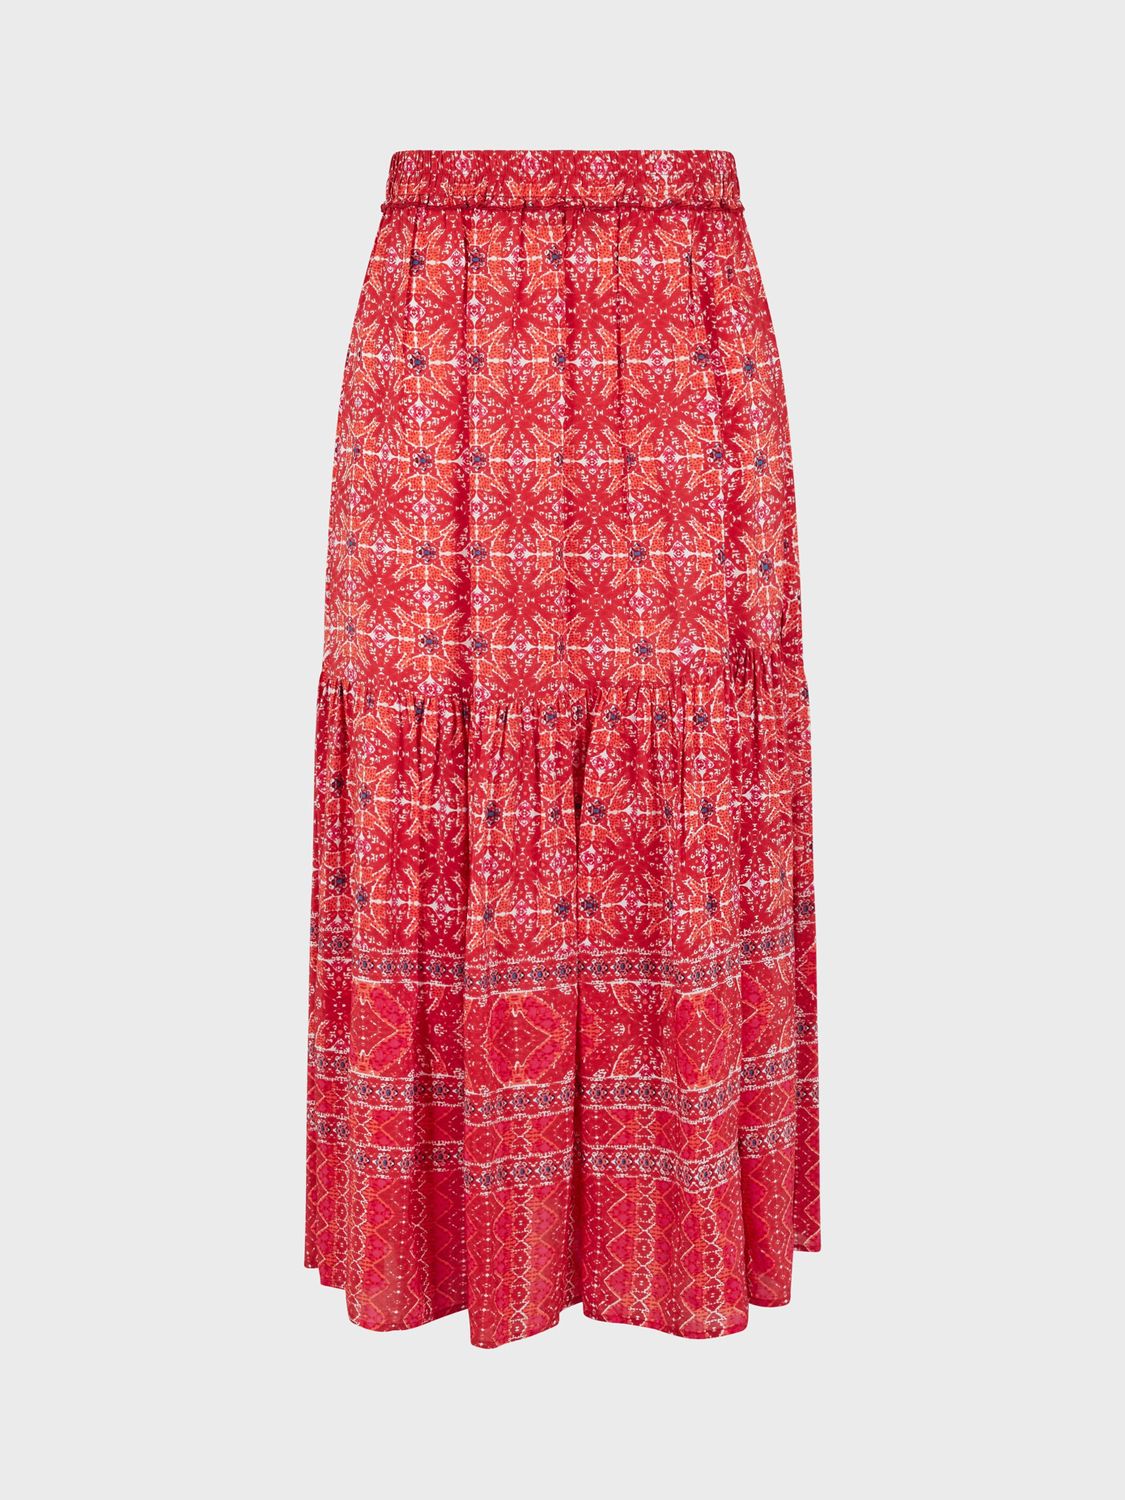 Gerard Darel Badice Abstract Print Midi Skirt, Red/Multi at John Lewis ...